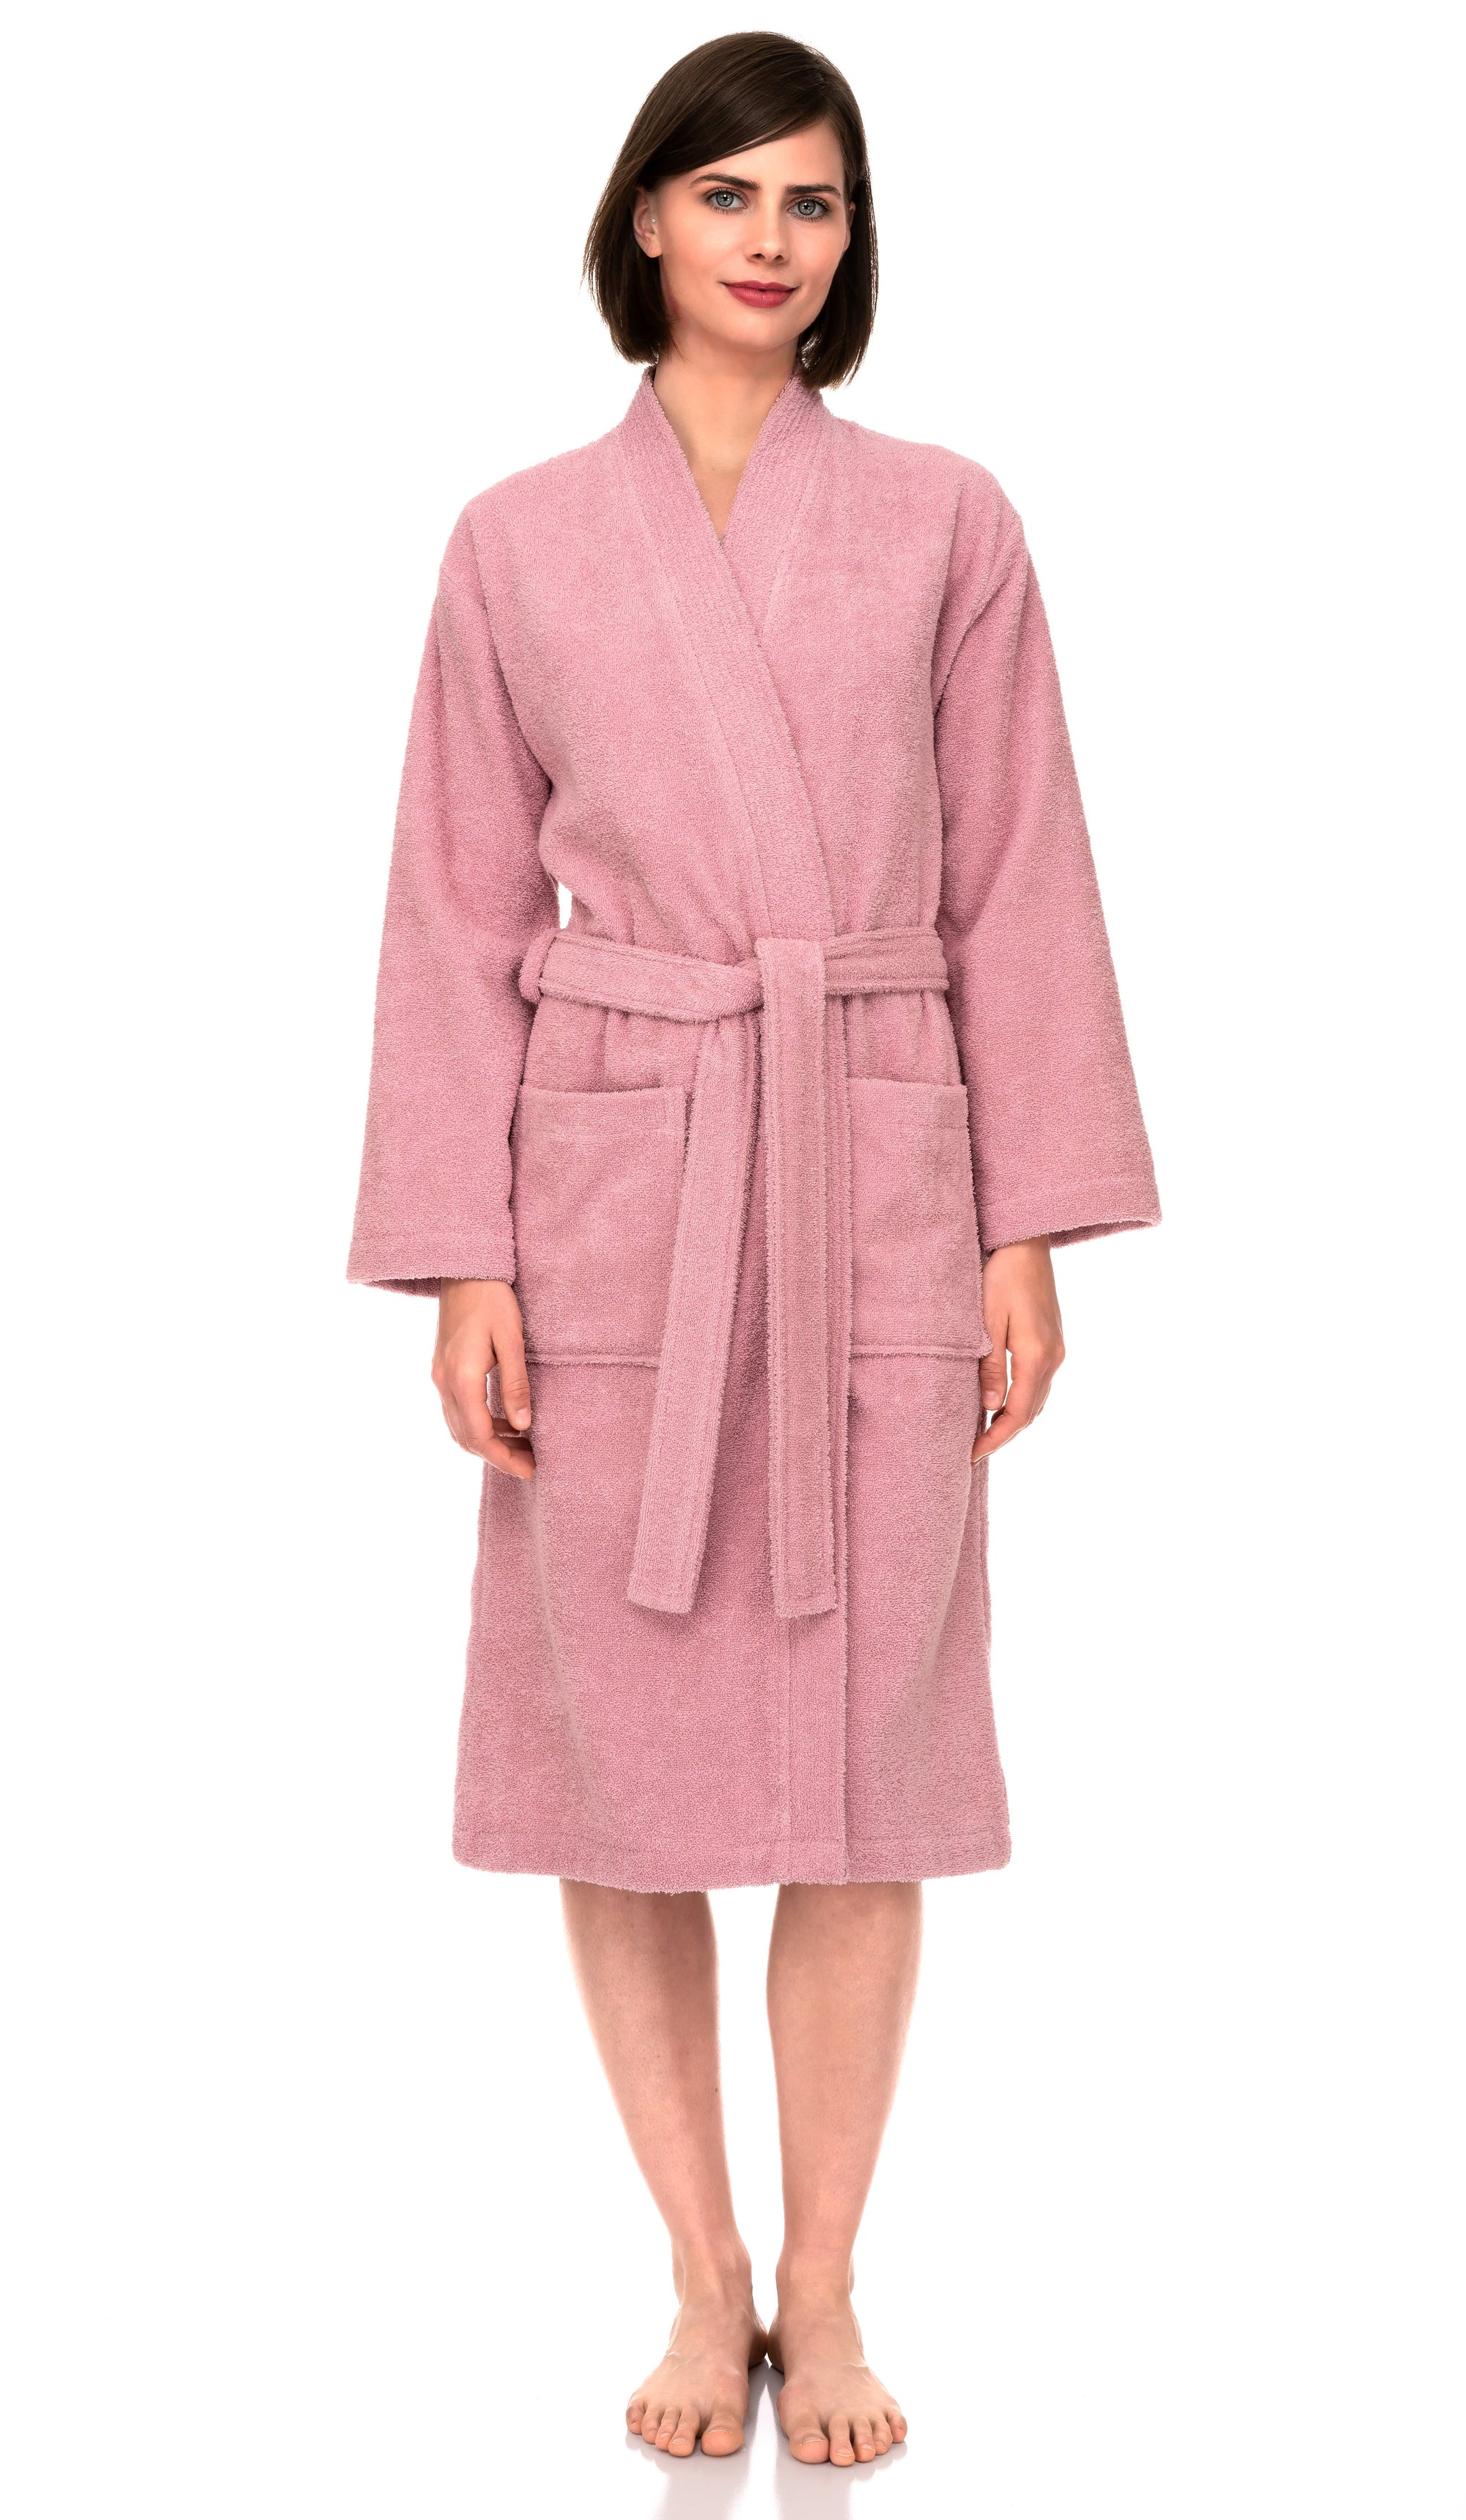 TowelSelections Womens Robe, Kimono Bathrobe for Women, 100% Cotton Knee Length Terry Cloth Robes for Women